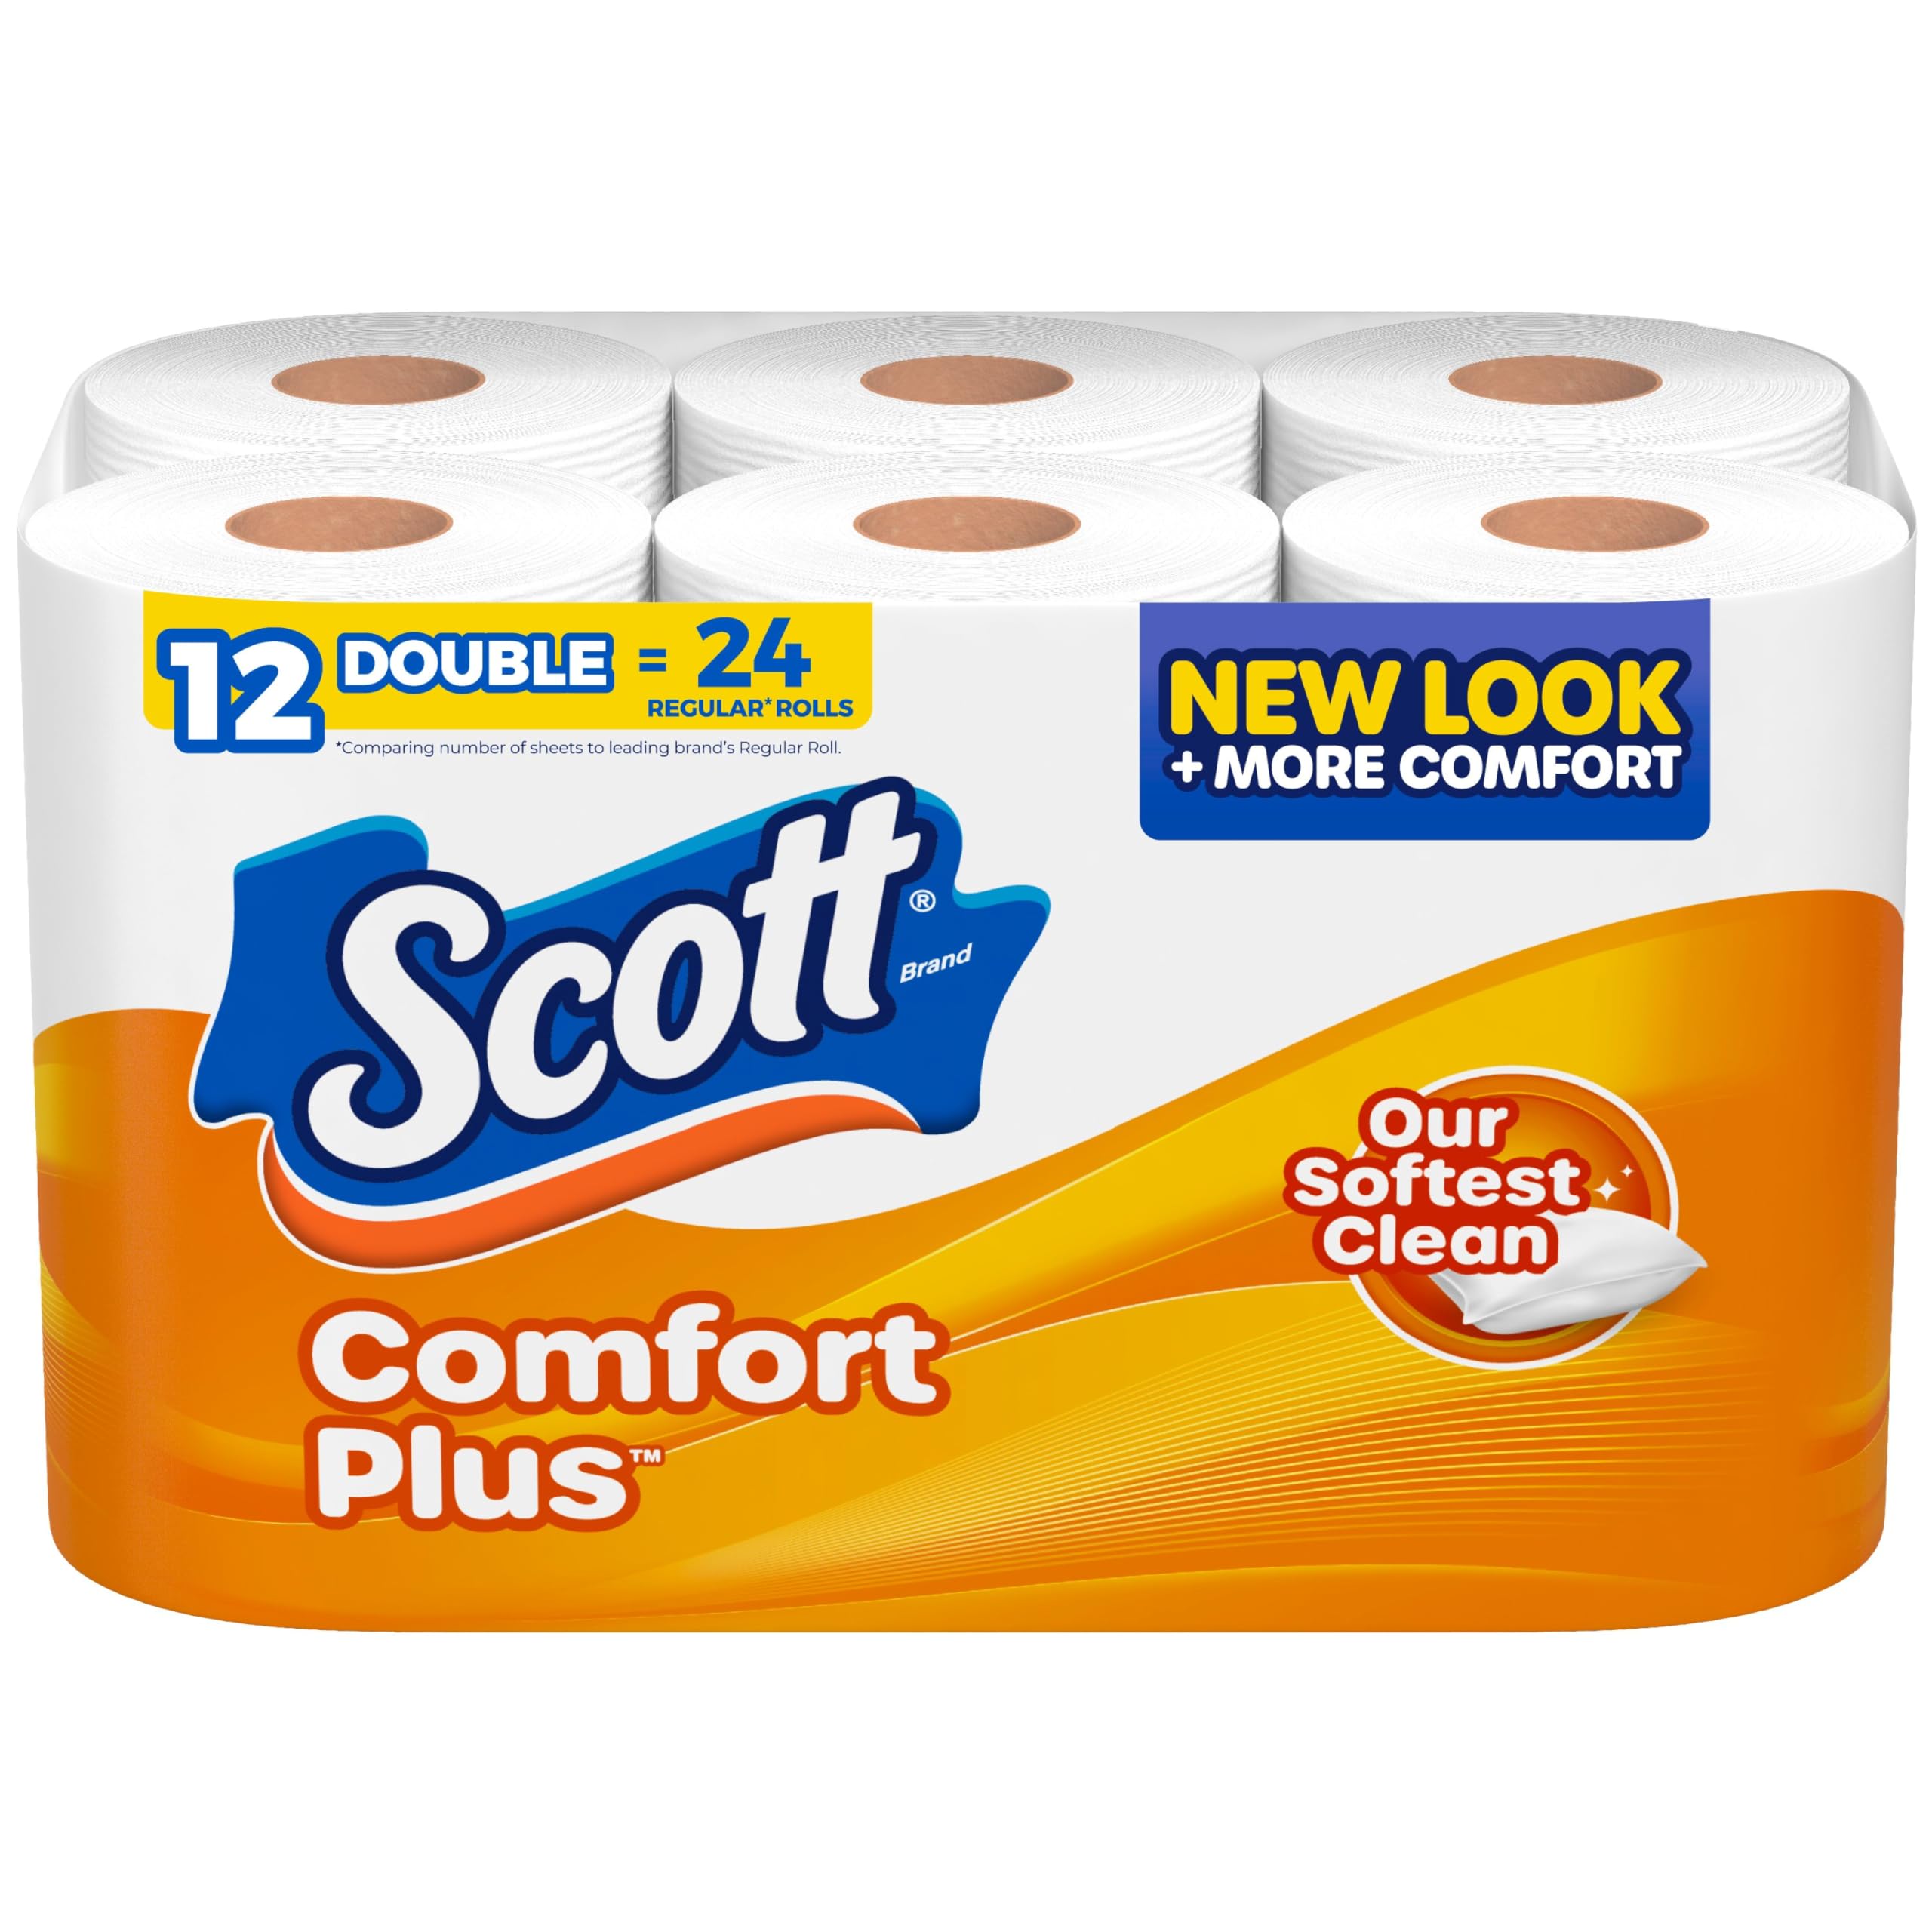 Scott Comfort Plus Toilet Paper 12 Pack Double Rolls, $5.69 or less w Amazon S & S